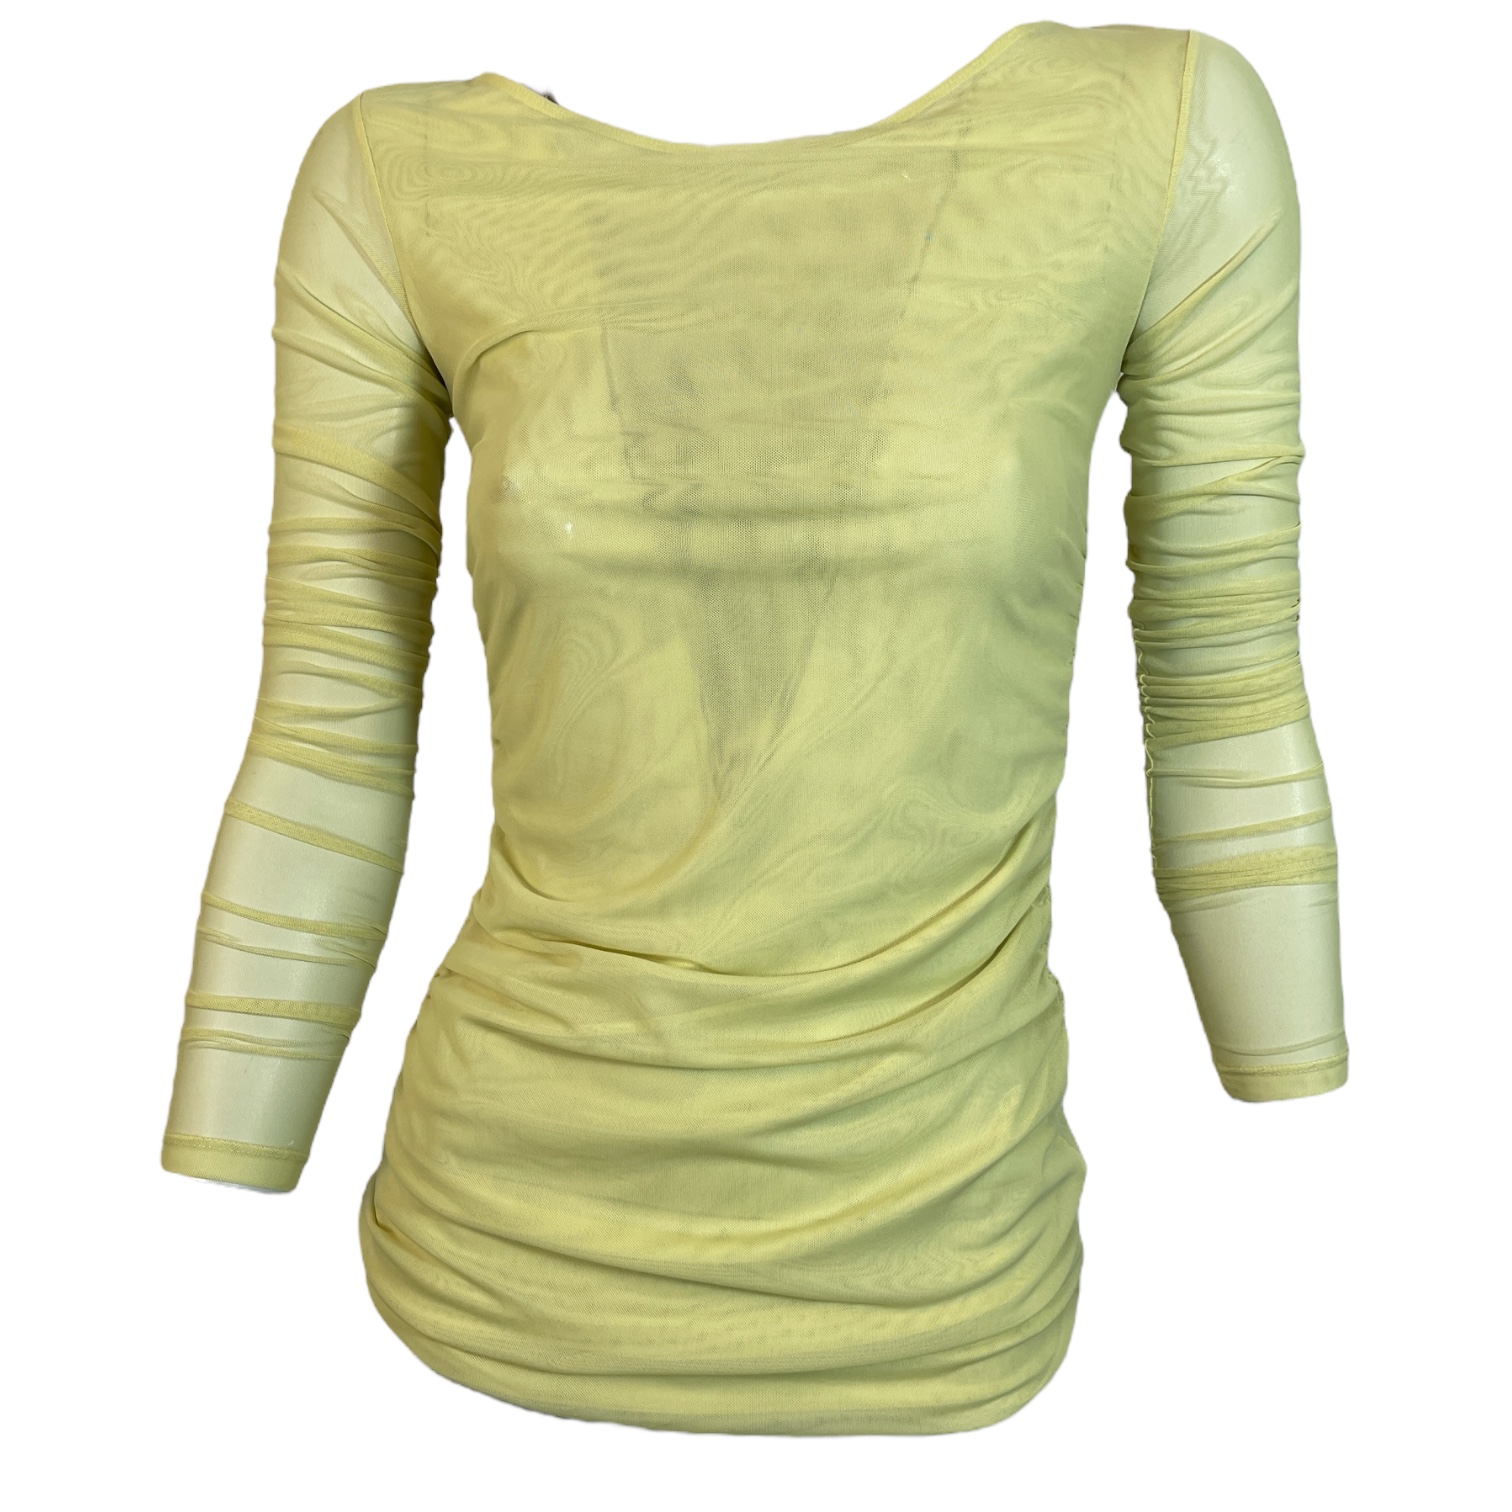 PATRIZIA PEPE 8M1571 J177 Damen Shirt Durchsichtiges Mesh-Top Longsleeve Gelb G568